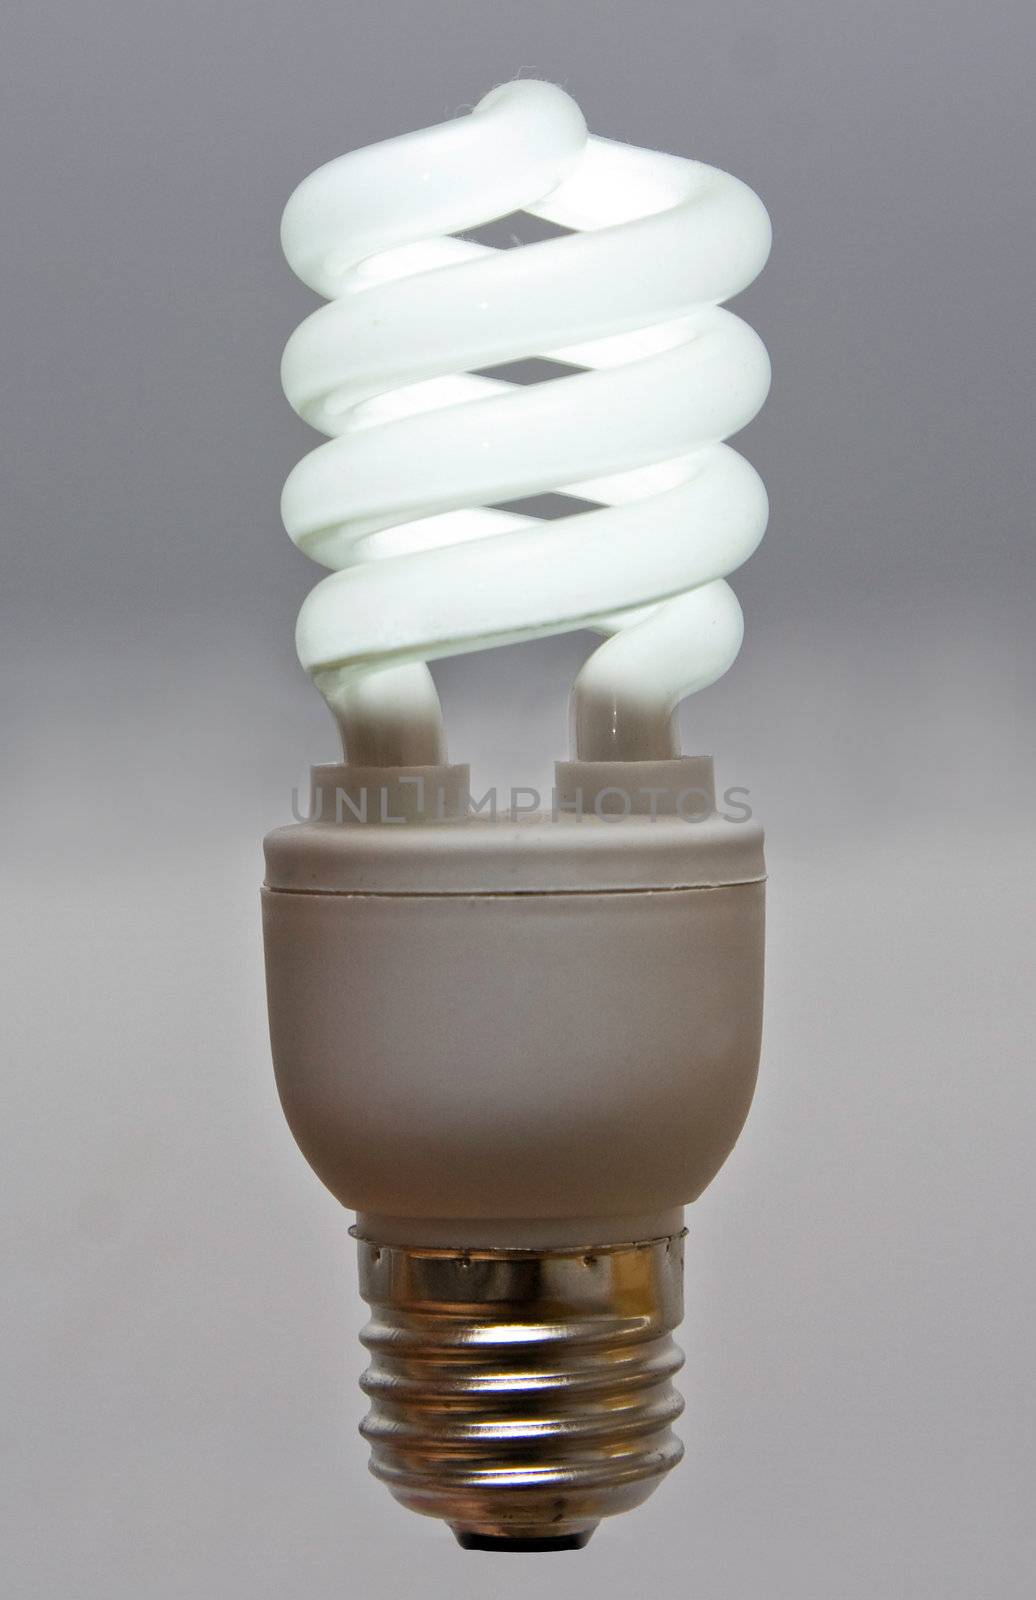 Fluorescent bulb by phakimata